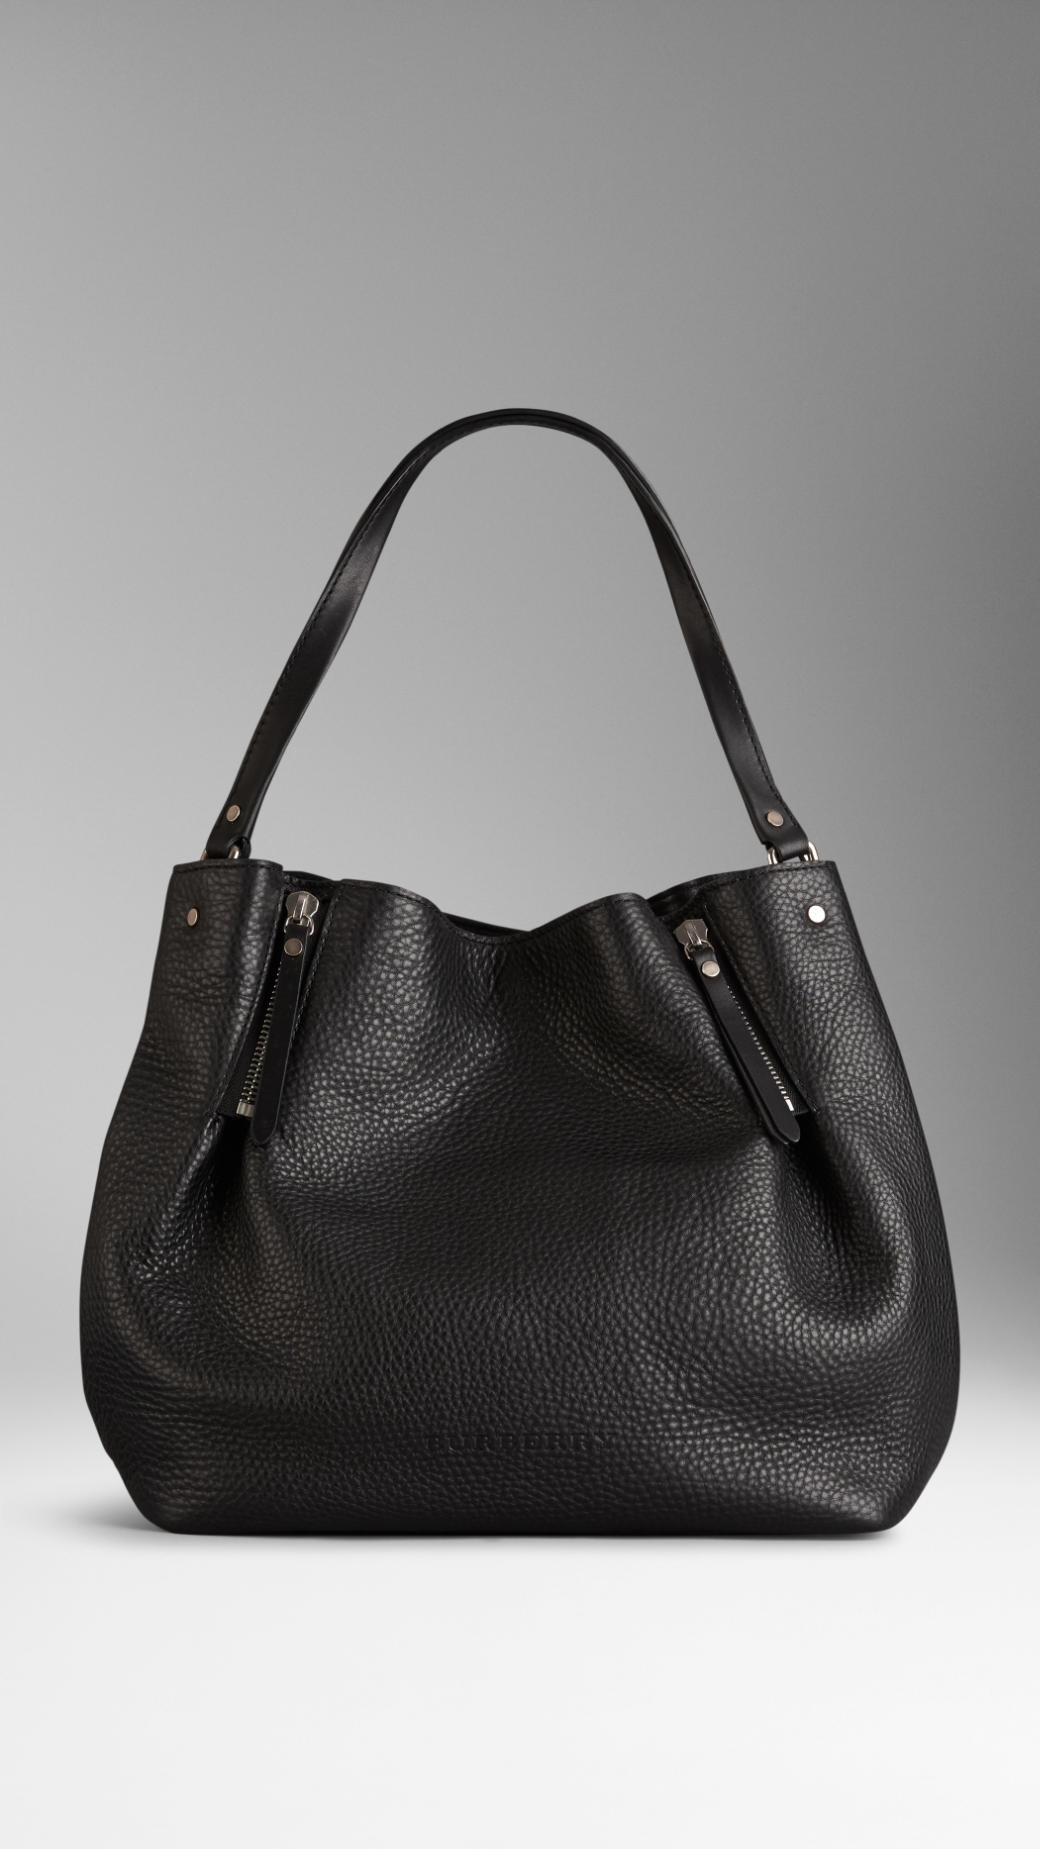 Burberry Medium Zip Detail Leather Tote Bag in Black - Lyst